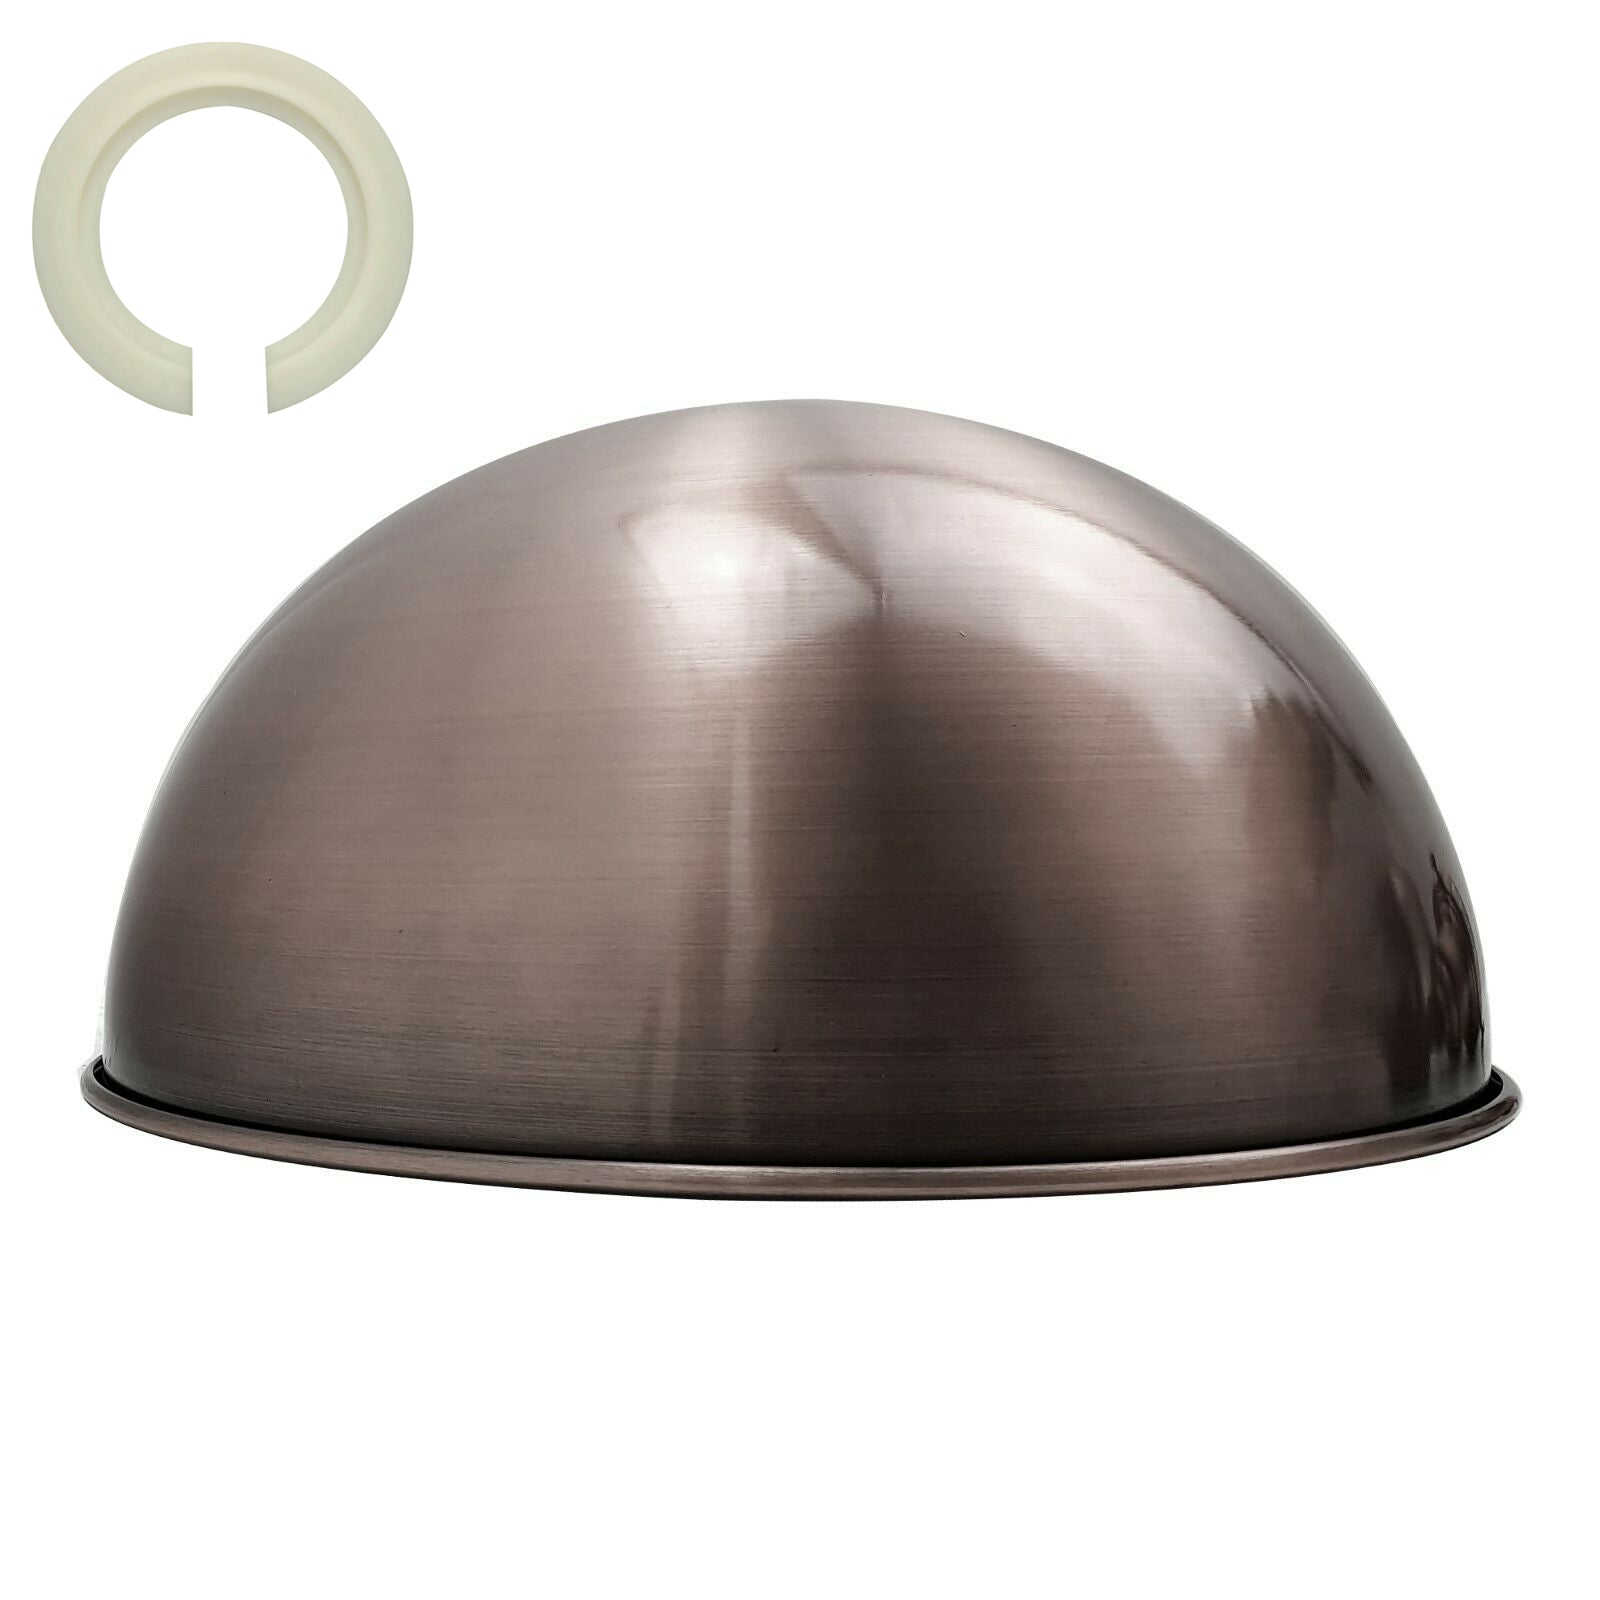 Dome pendant lights uk